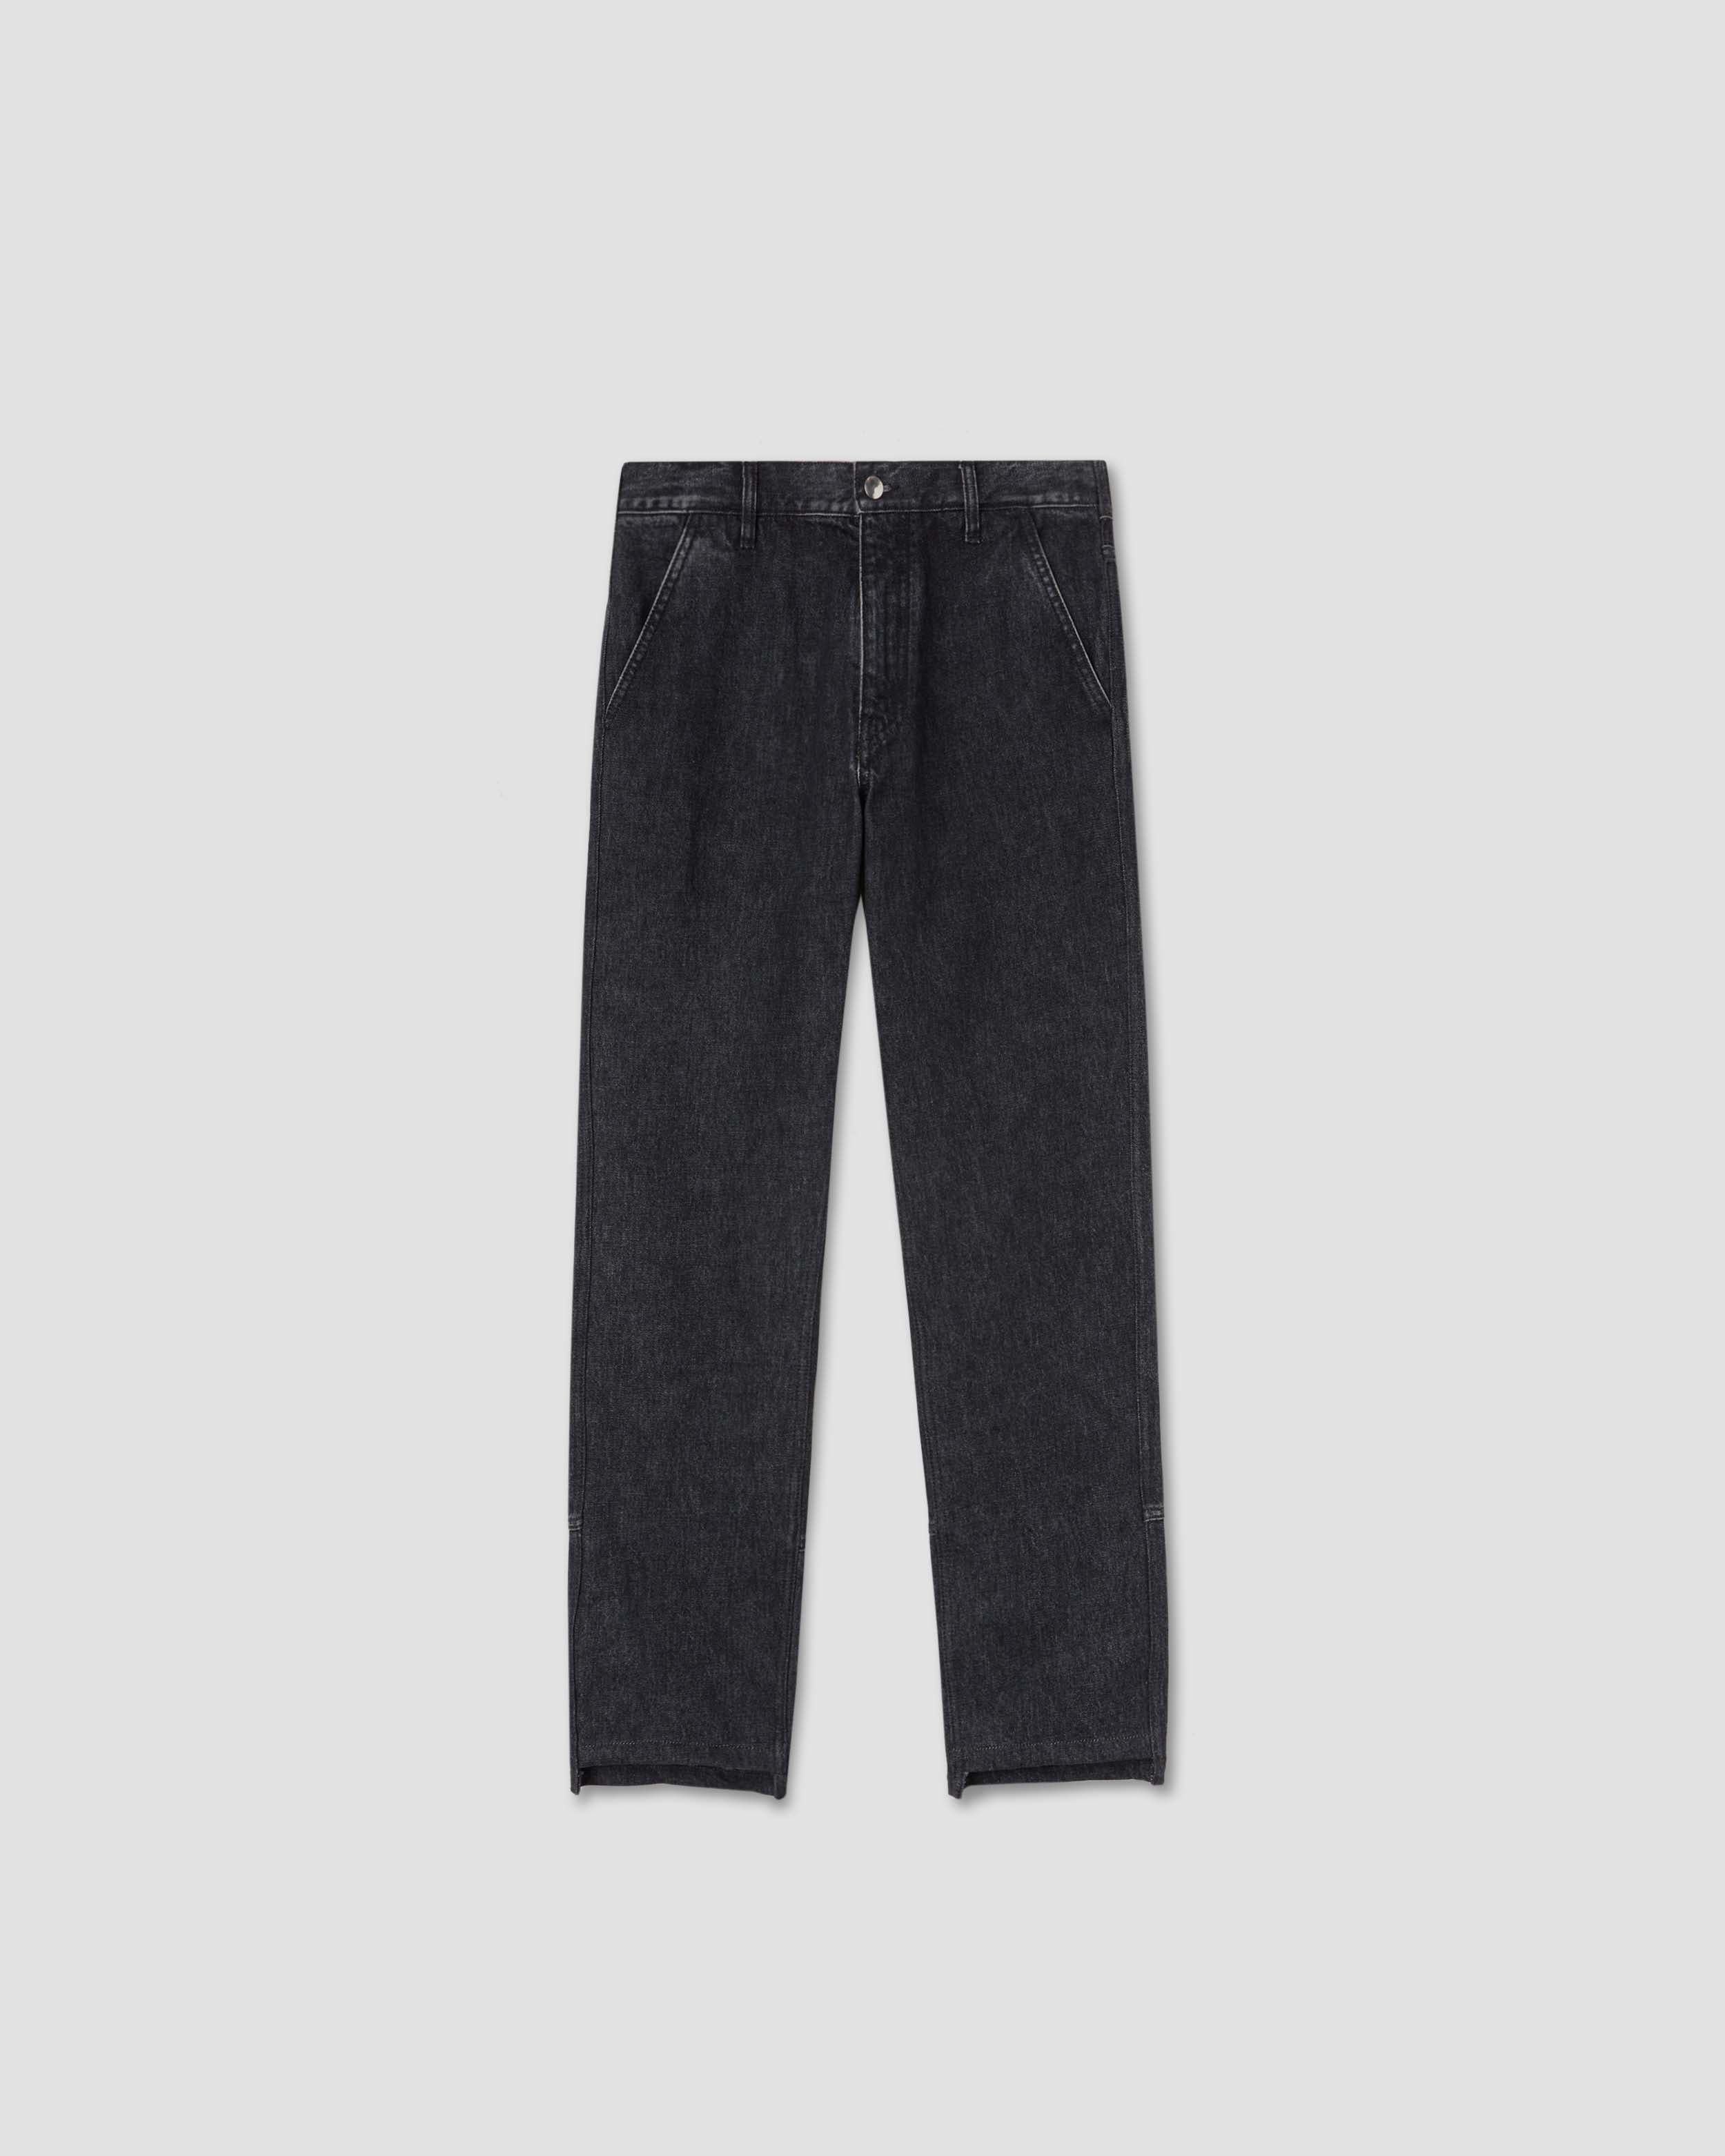 Windsor Trousers in Black | OAMC